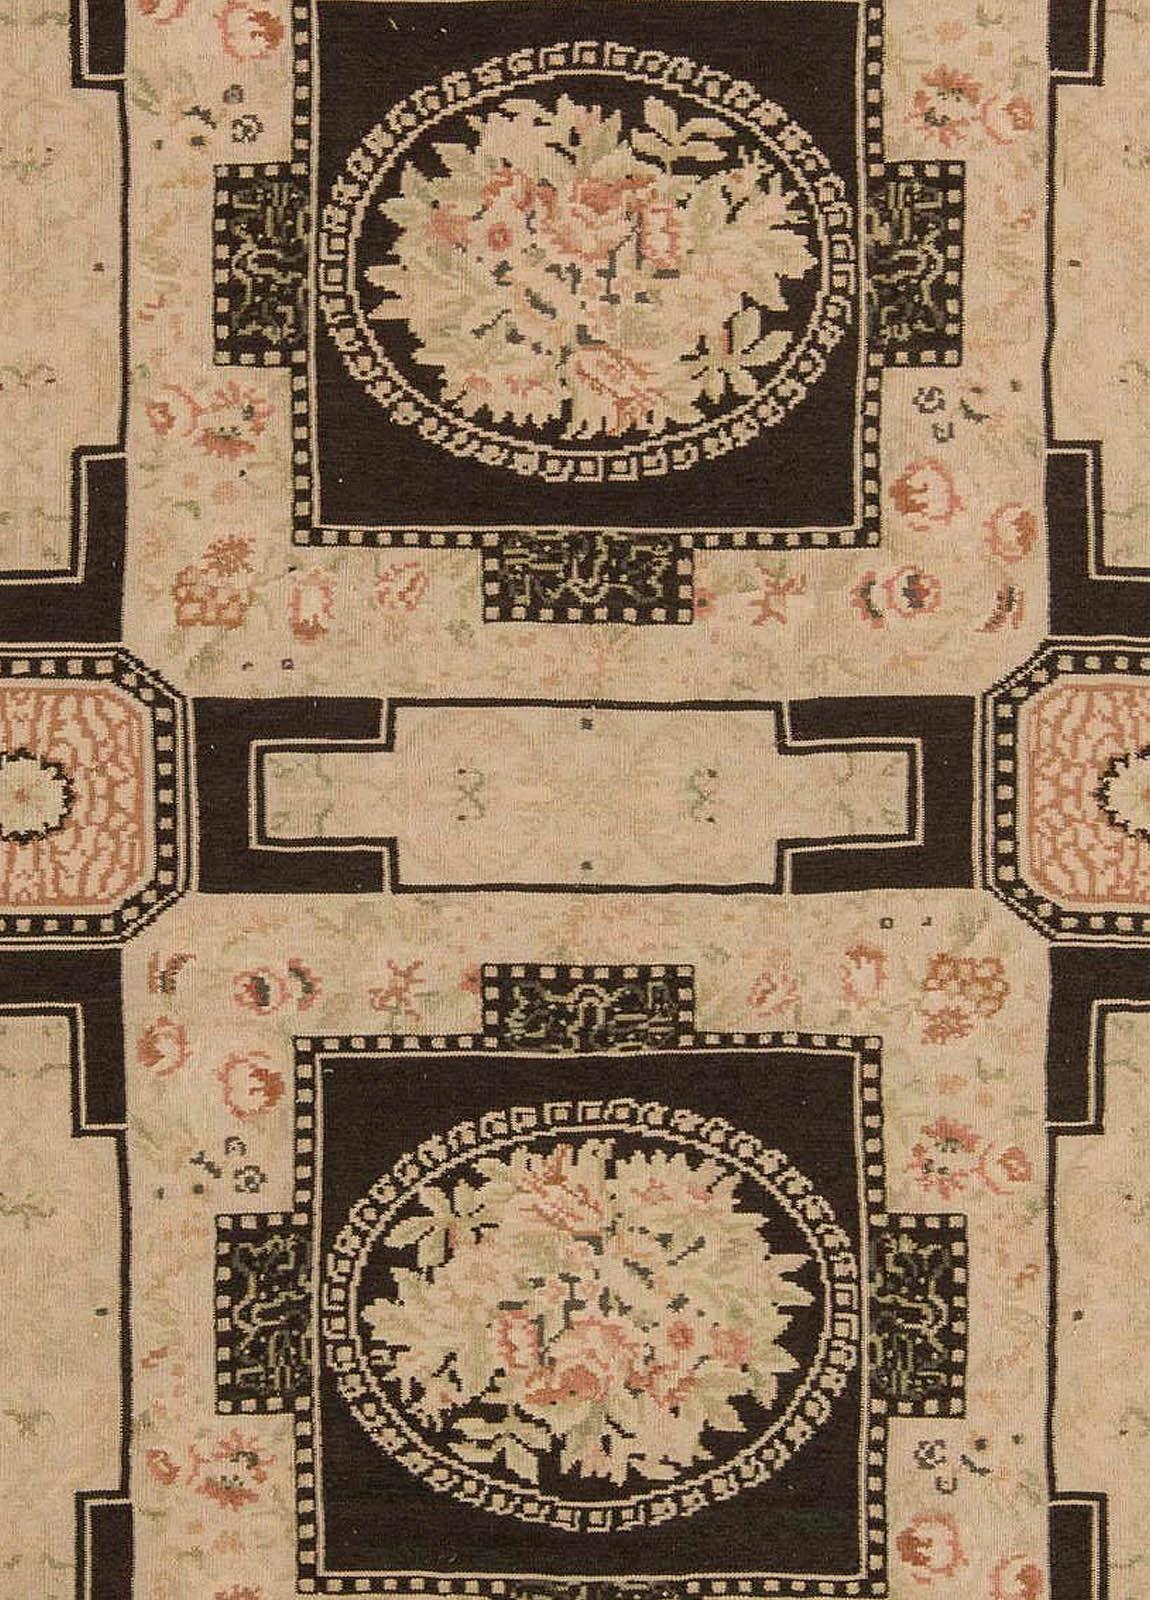 Contemporary traditional European inspired Bessarabian rug by Doris Leslie Blau.
Size: 10'0